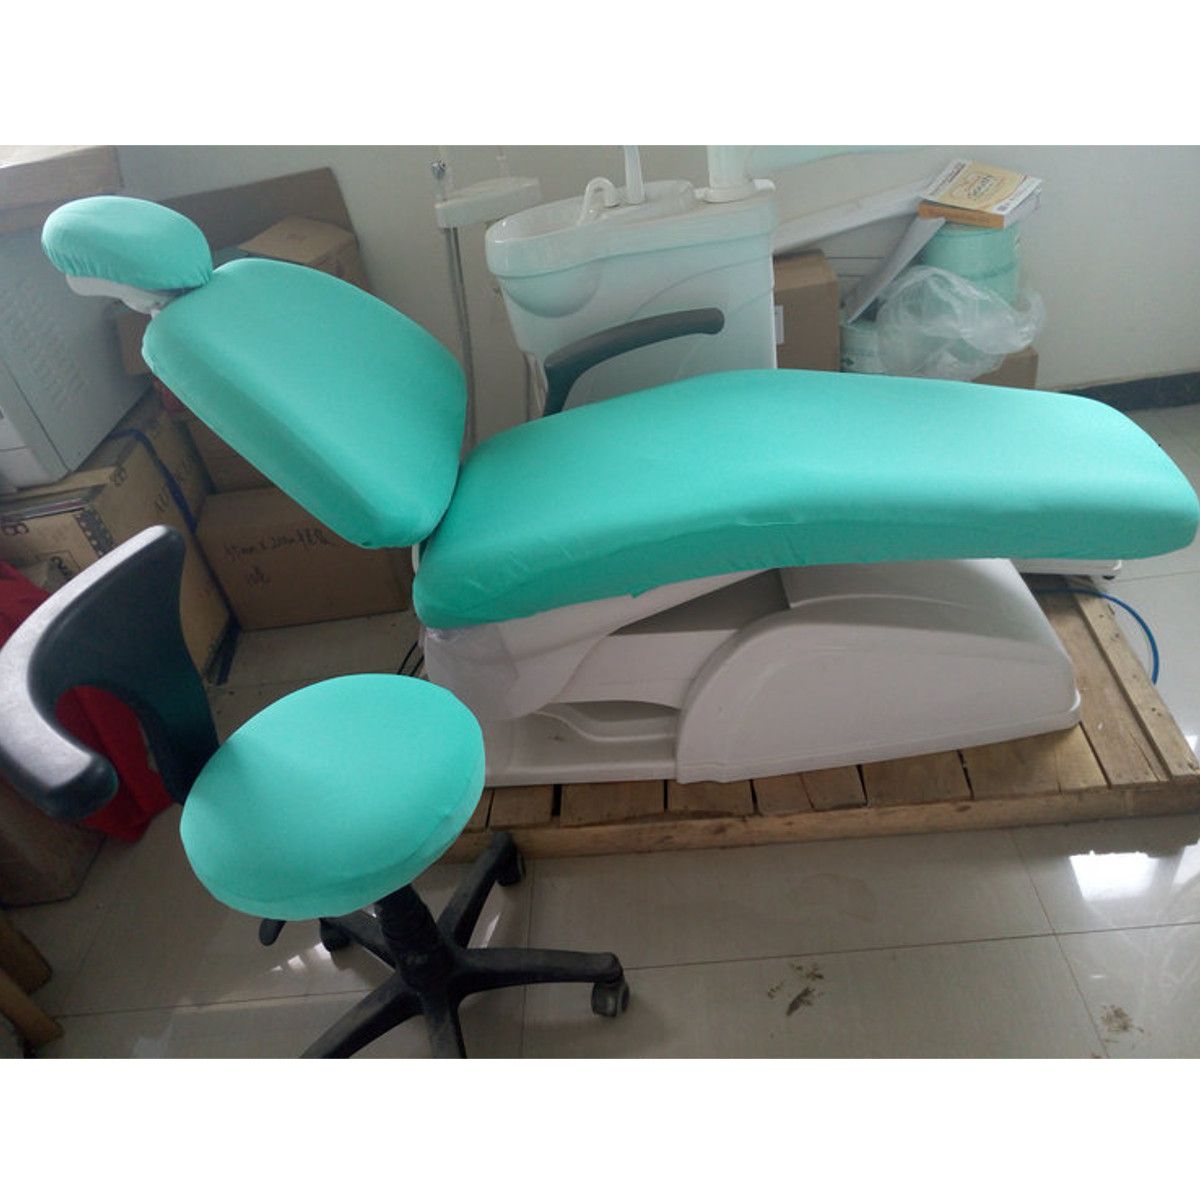 4Pcs-Dental-Unit-Chair-Covers-Sleeves-Cushion-Protector-Headrest-Dentist-Stool-1393500